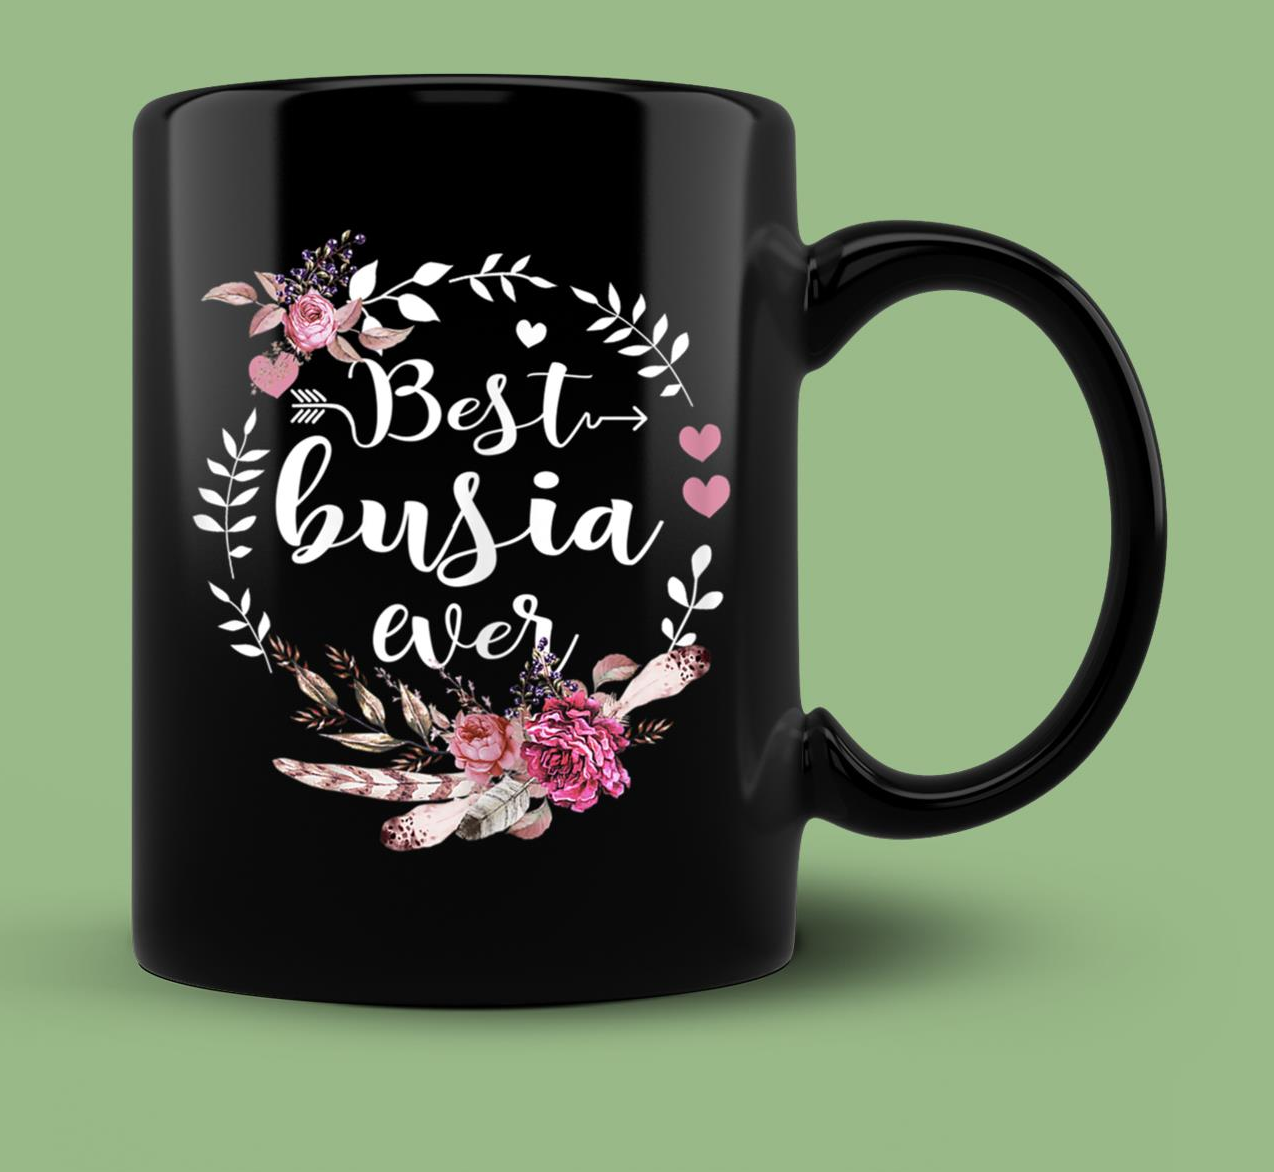 Skitongift Ceramic Novelty Coffee Mug Funny Thanksgiving Mugs Womens Best Busia Ever Mug Thanksgiving Floral Funny Gifts